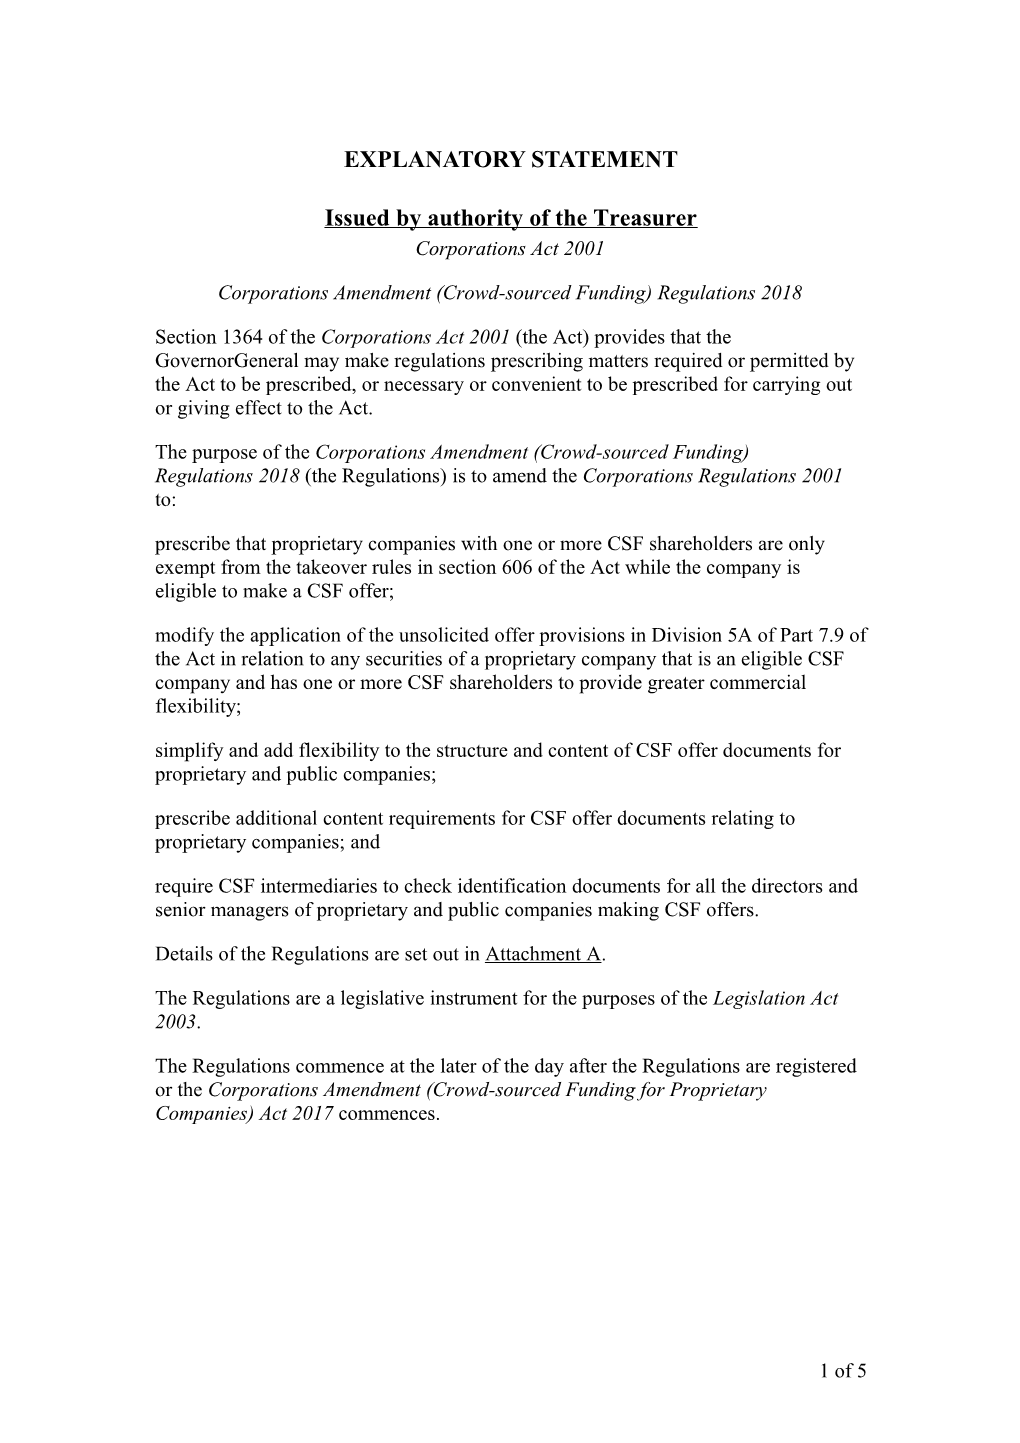 Corporations Amendment (Crowd-Sourced Funding) Regulations 2018 - Expanatory Statement